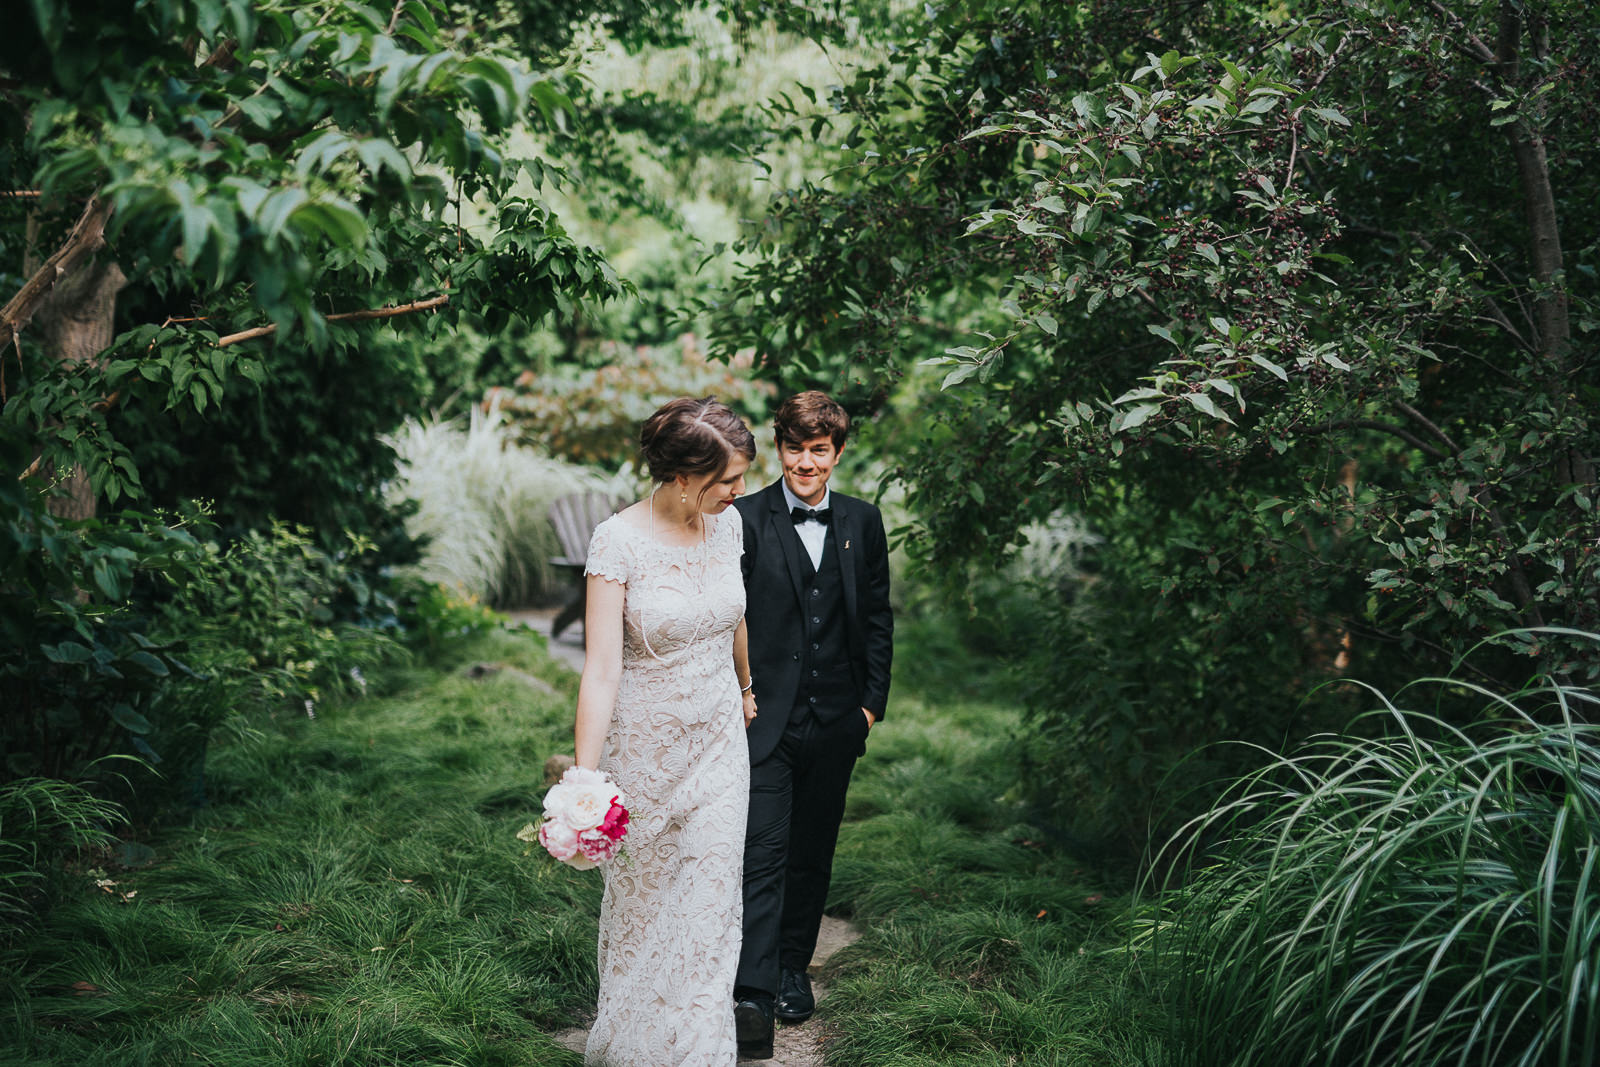 40 bride and groom walking through garden